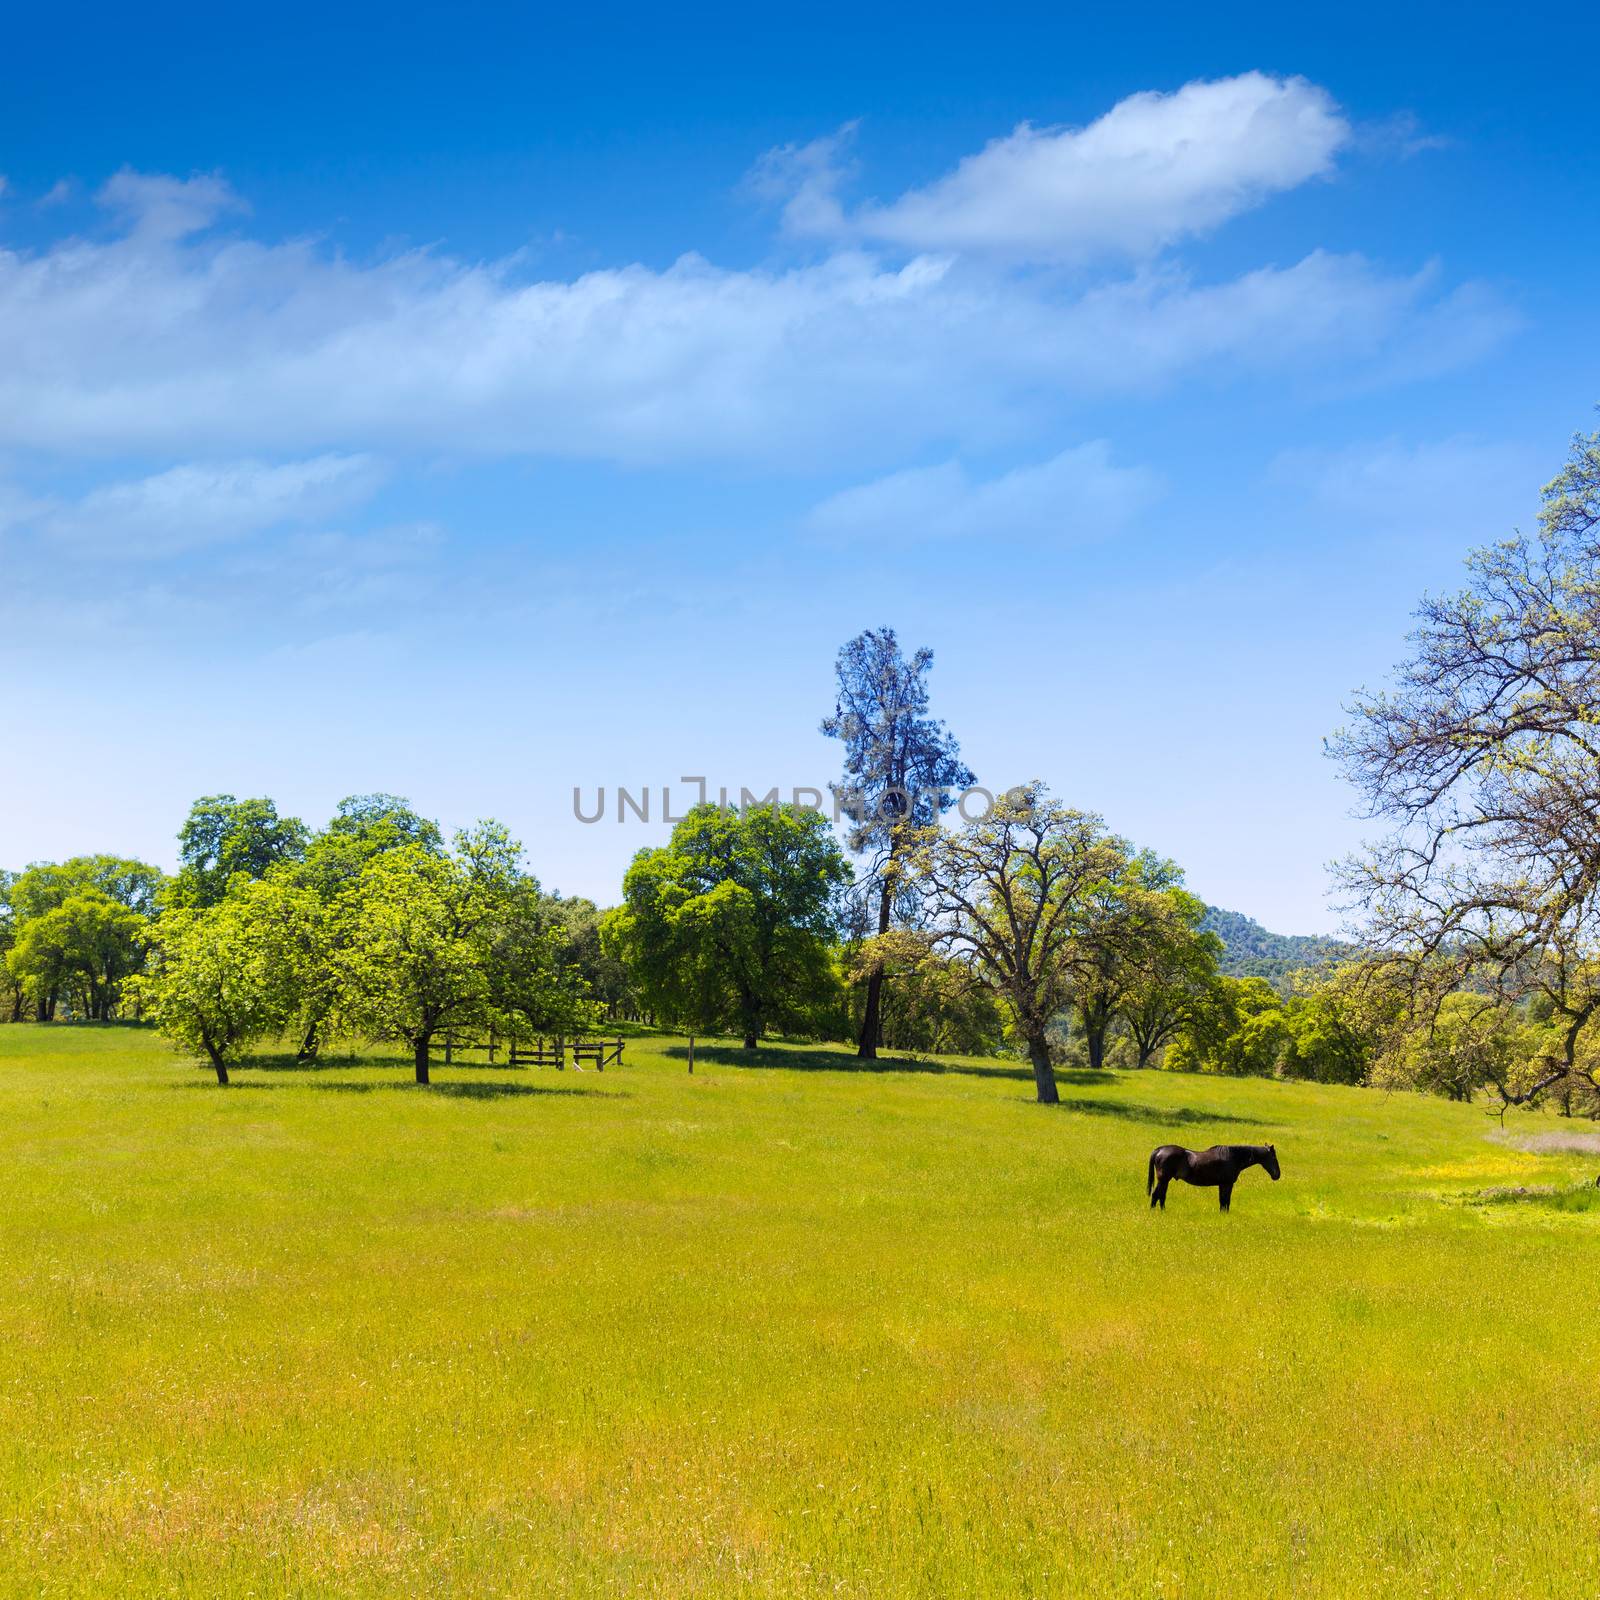 Dark horse in California meadows grasslands by lunamarina